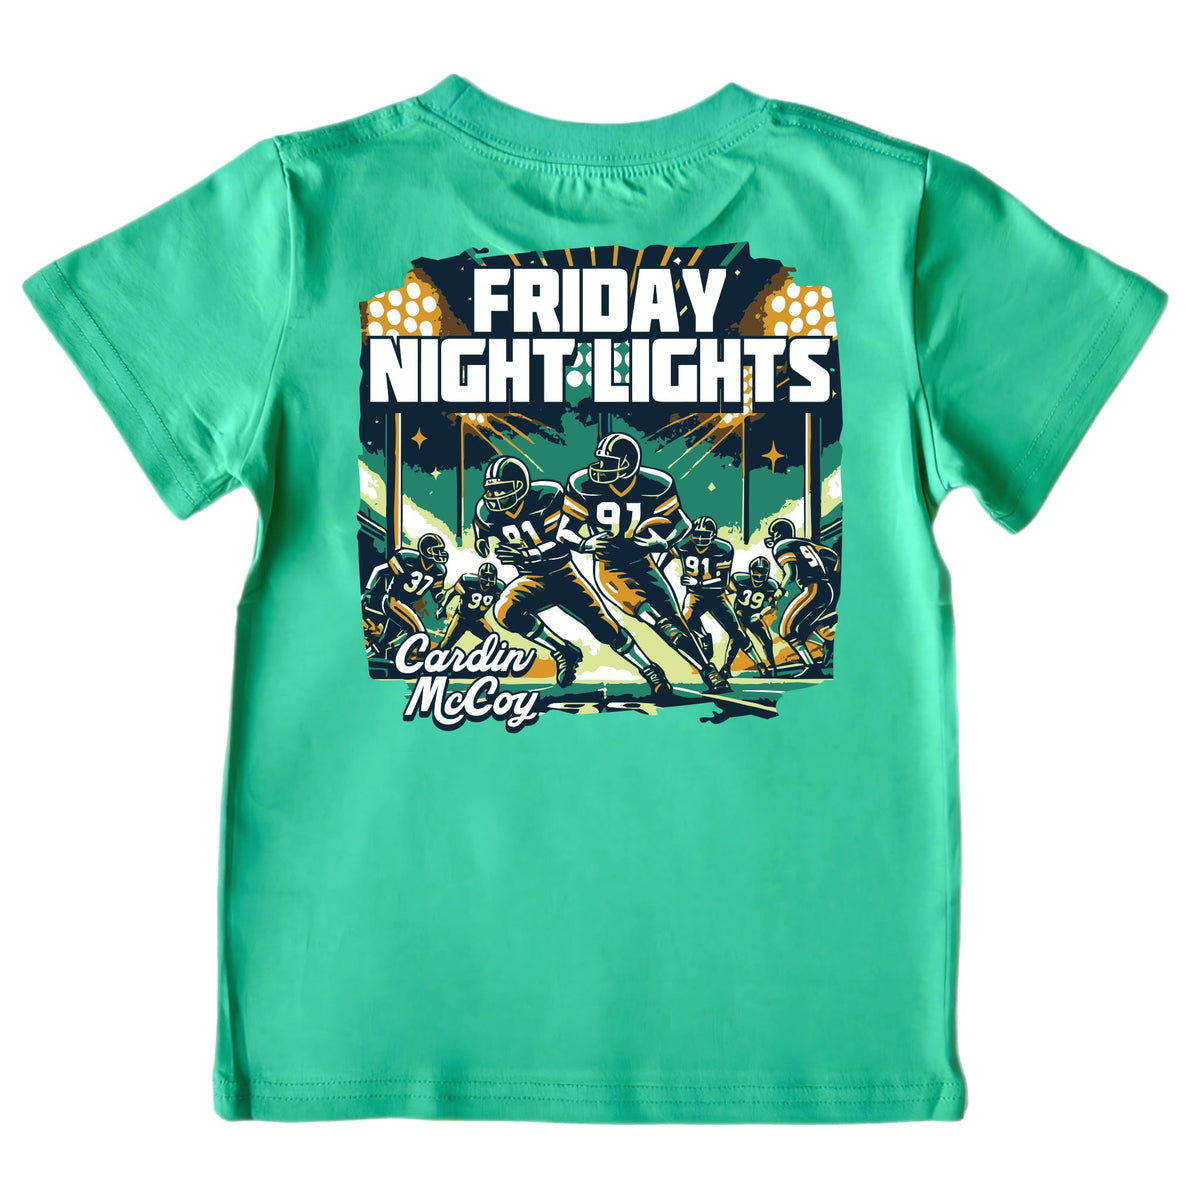 Boys' Friday Night Lights Short-Sleeve Tee Short Sleeve T-Shirt Cardin McCoy Green XXS (2/3) Pocket